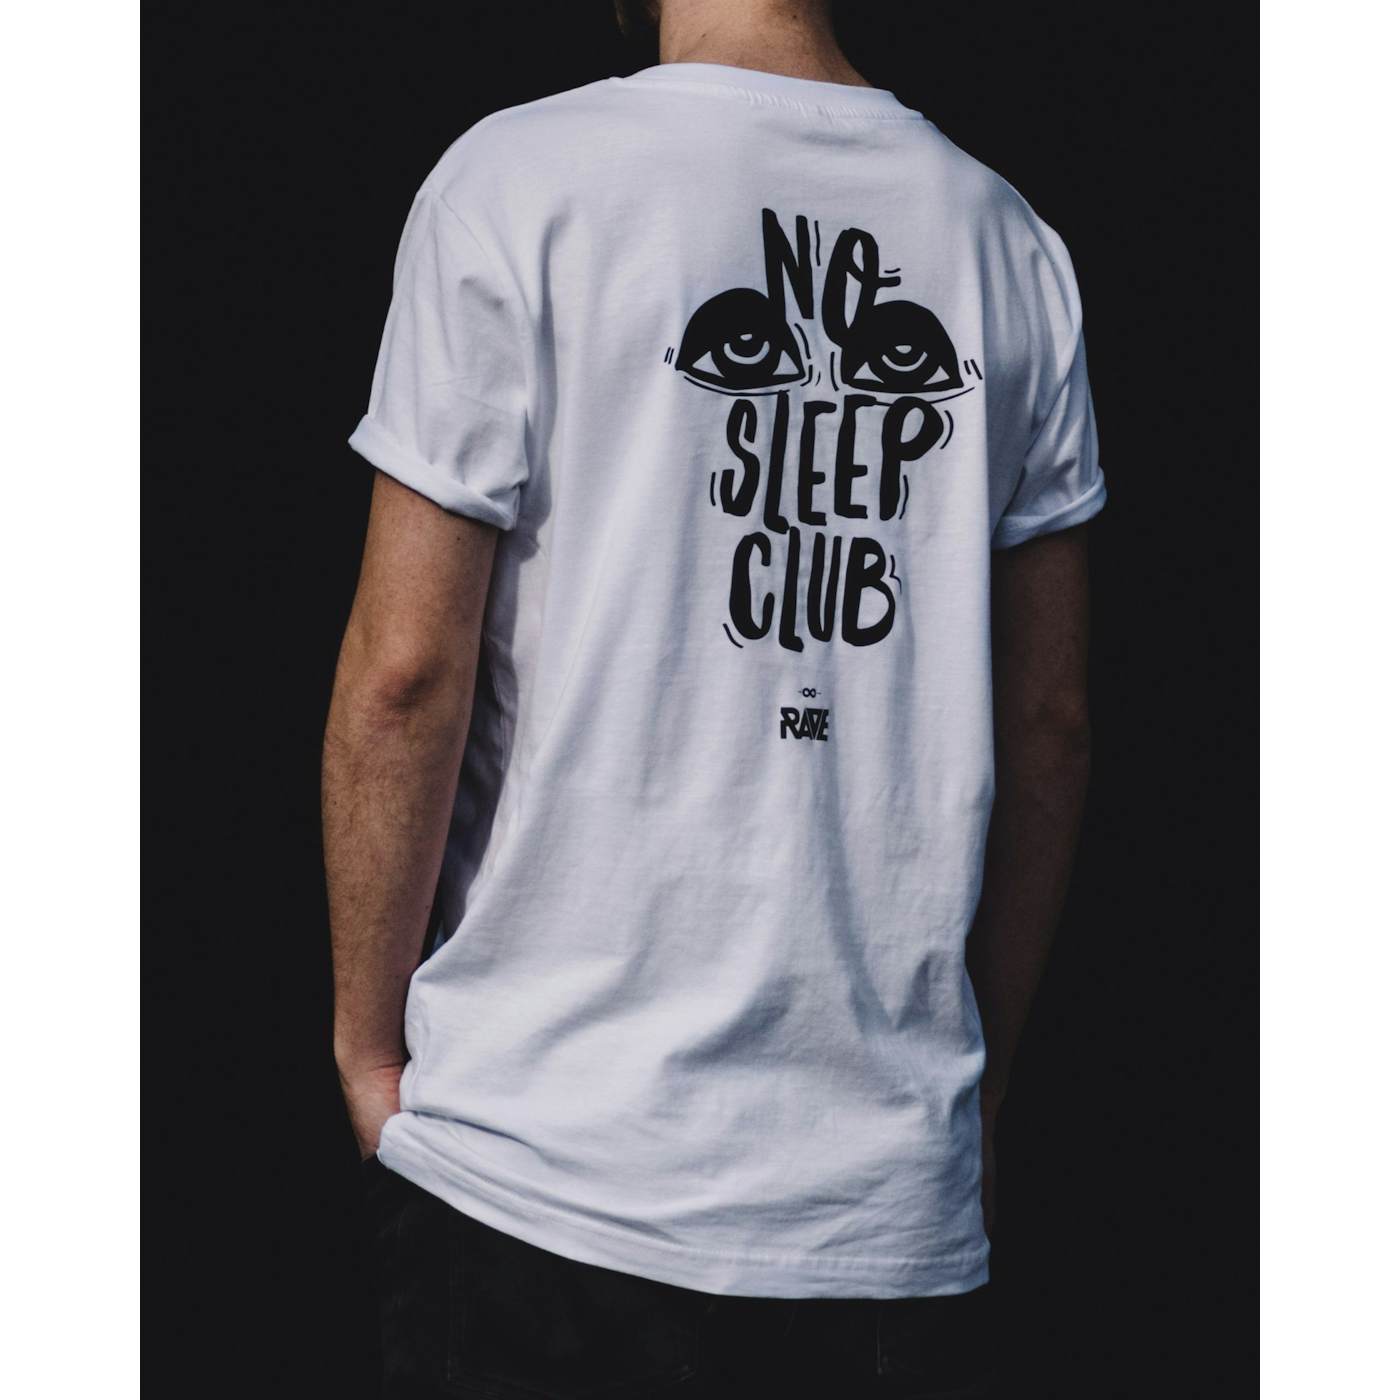 Rave Clothing No Sleep Club T-Shirt in weiß